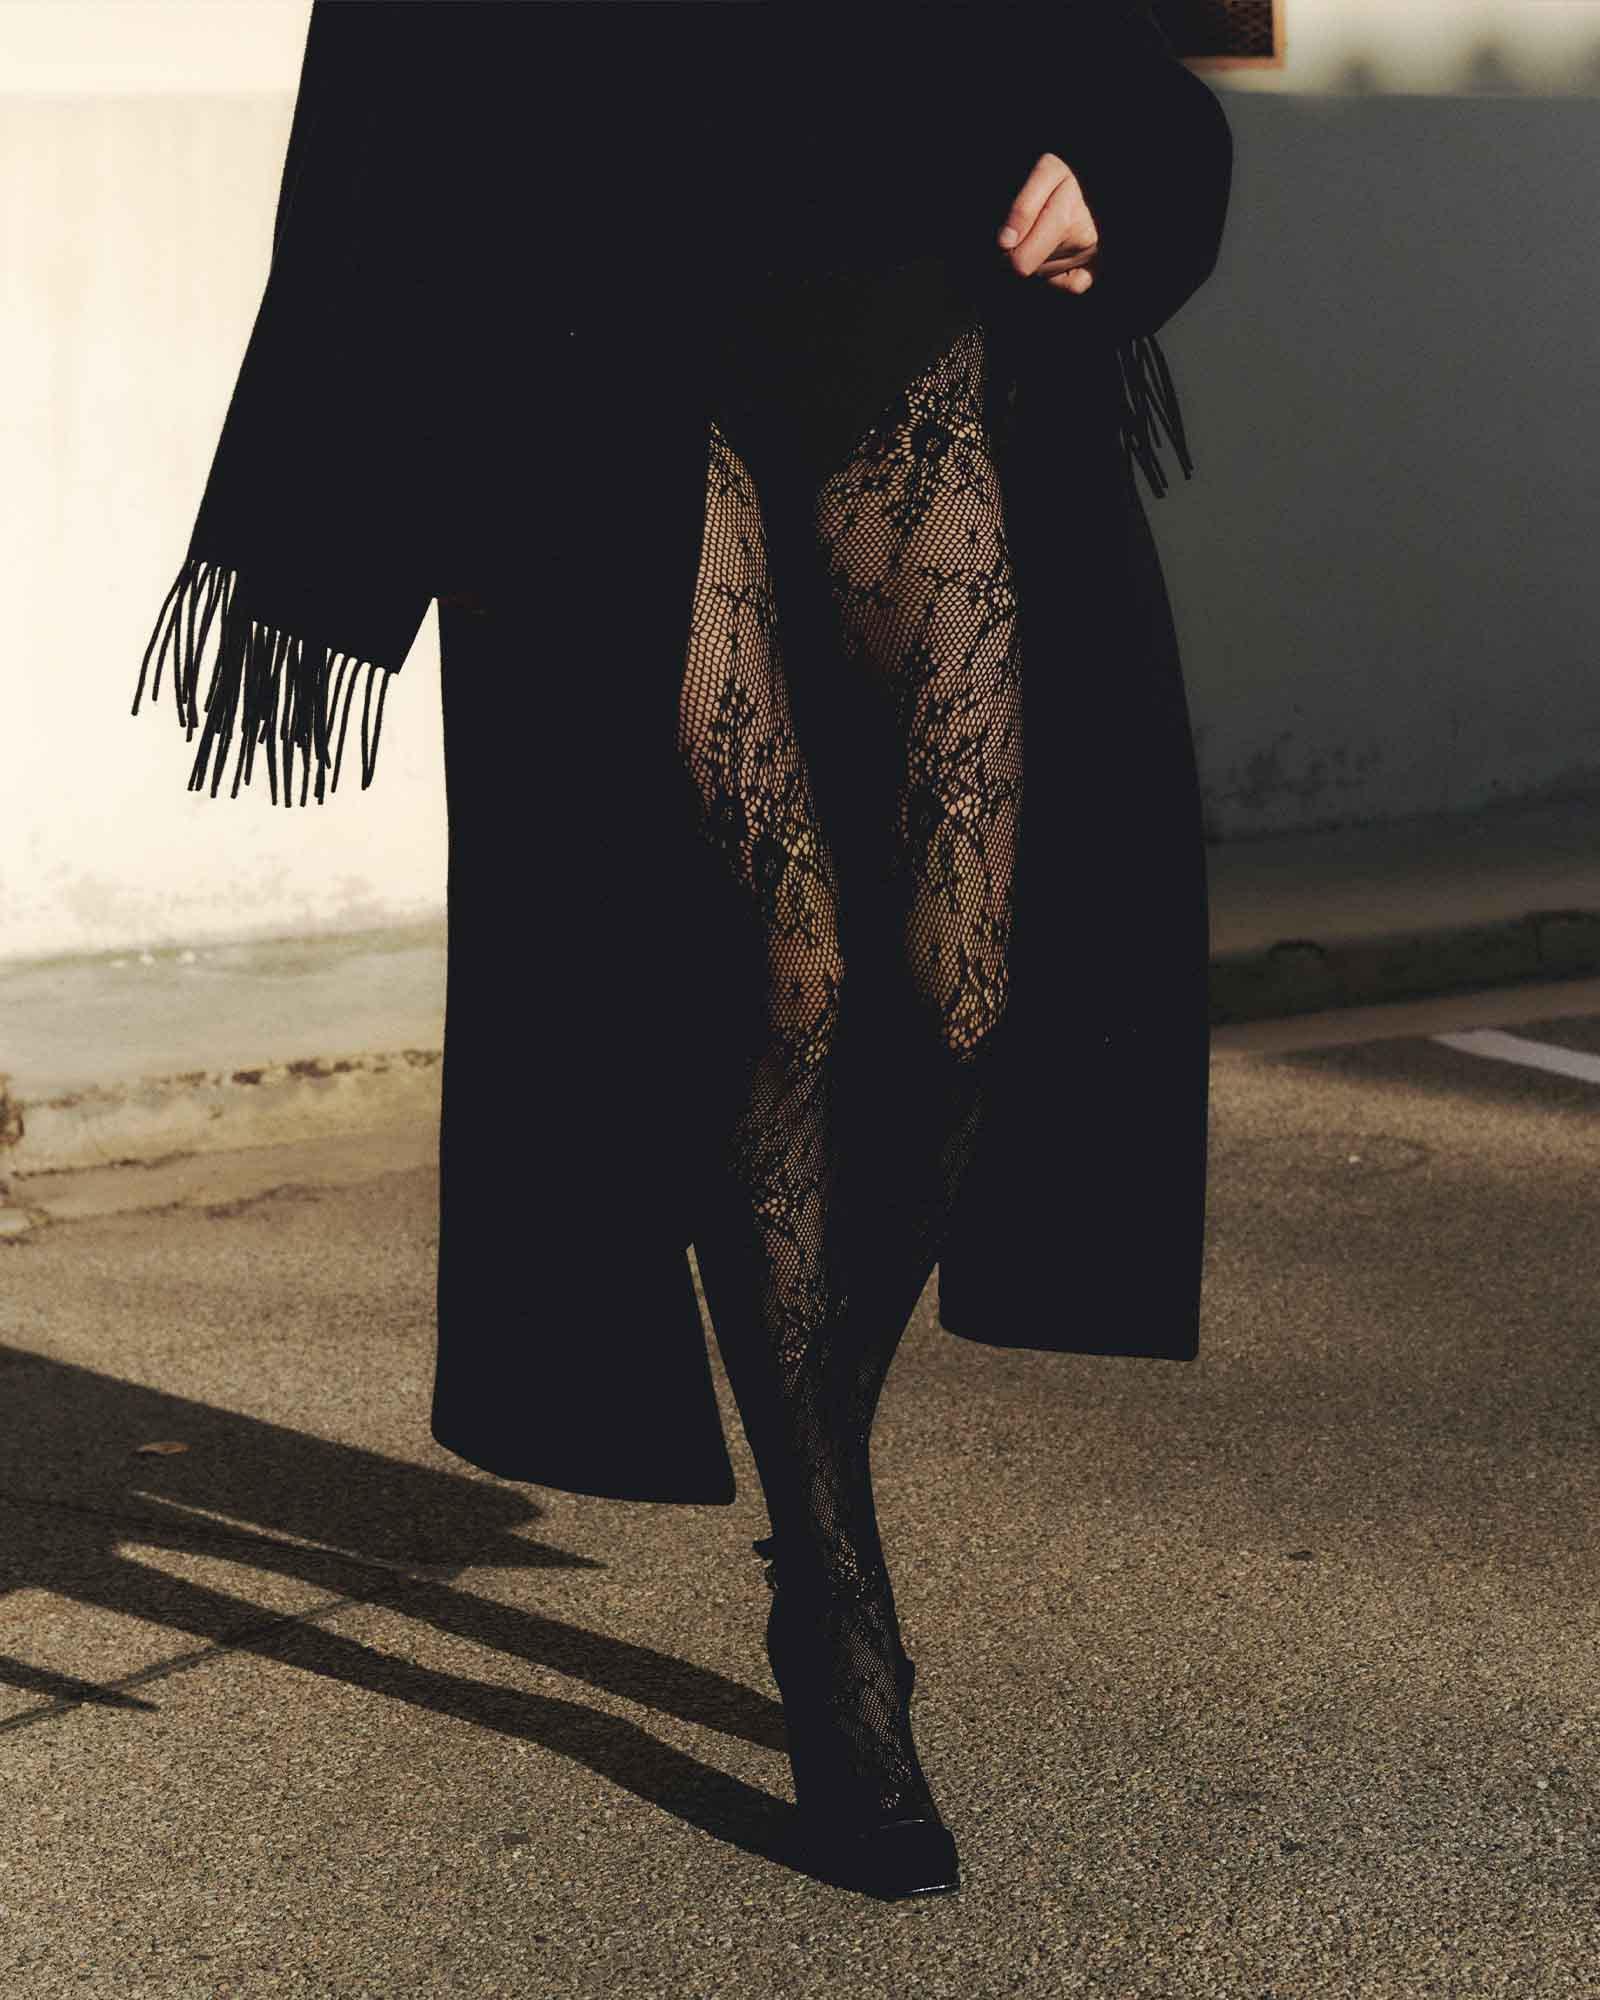 Black Lace Stockings